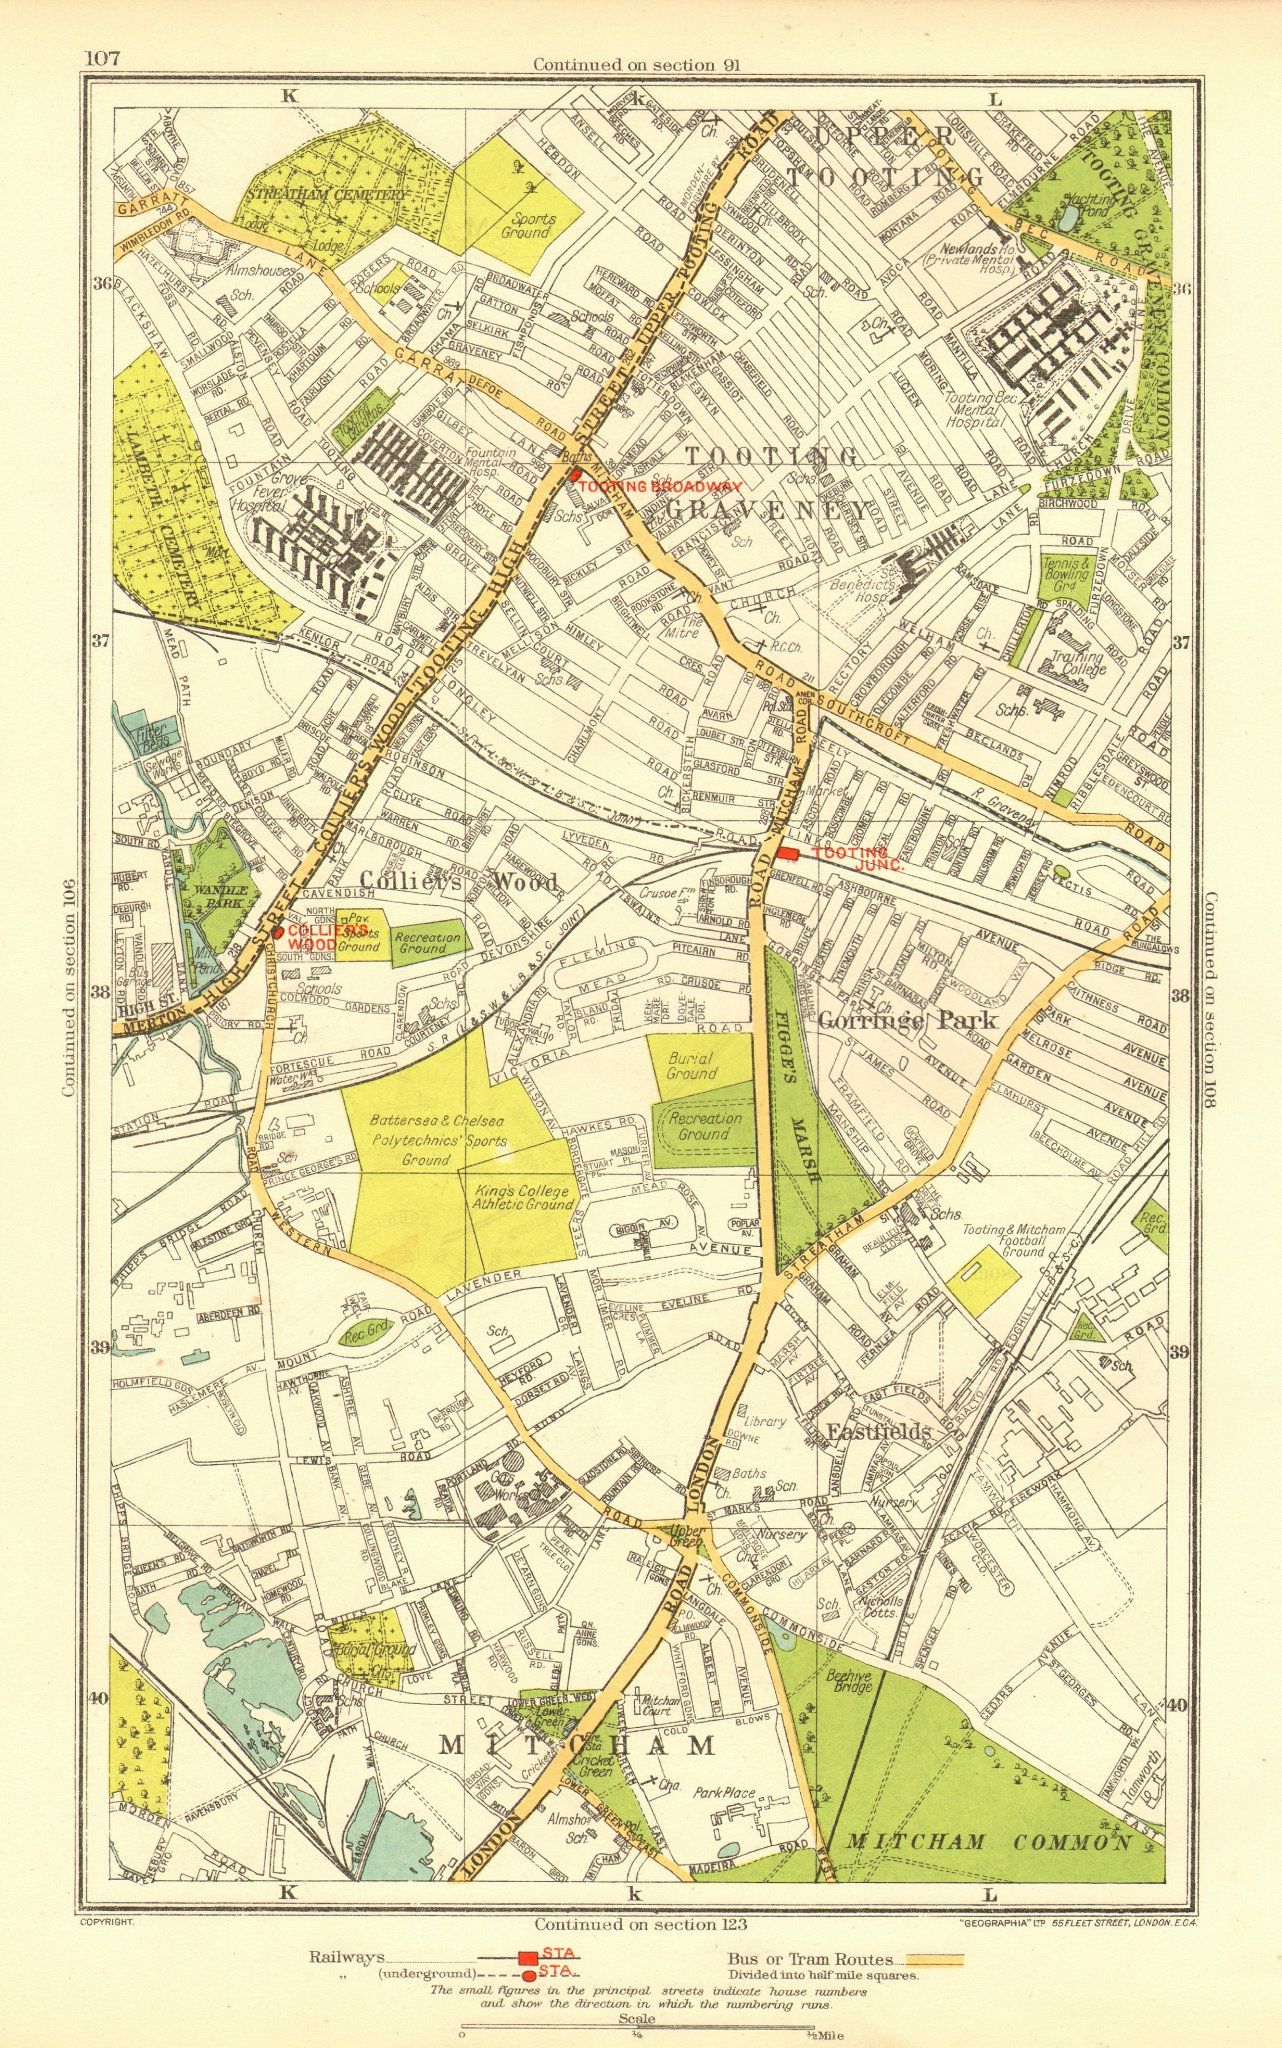 MITCHAM. Collier's Wood Tooting Graveney Furzedown Eastfields 1937 old map